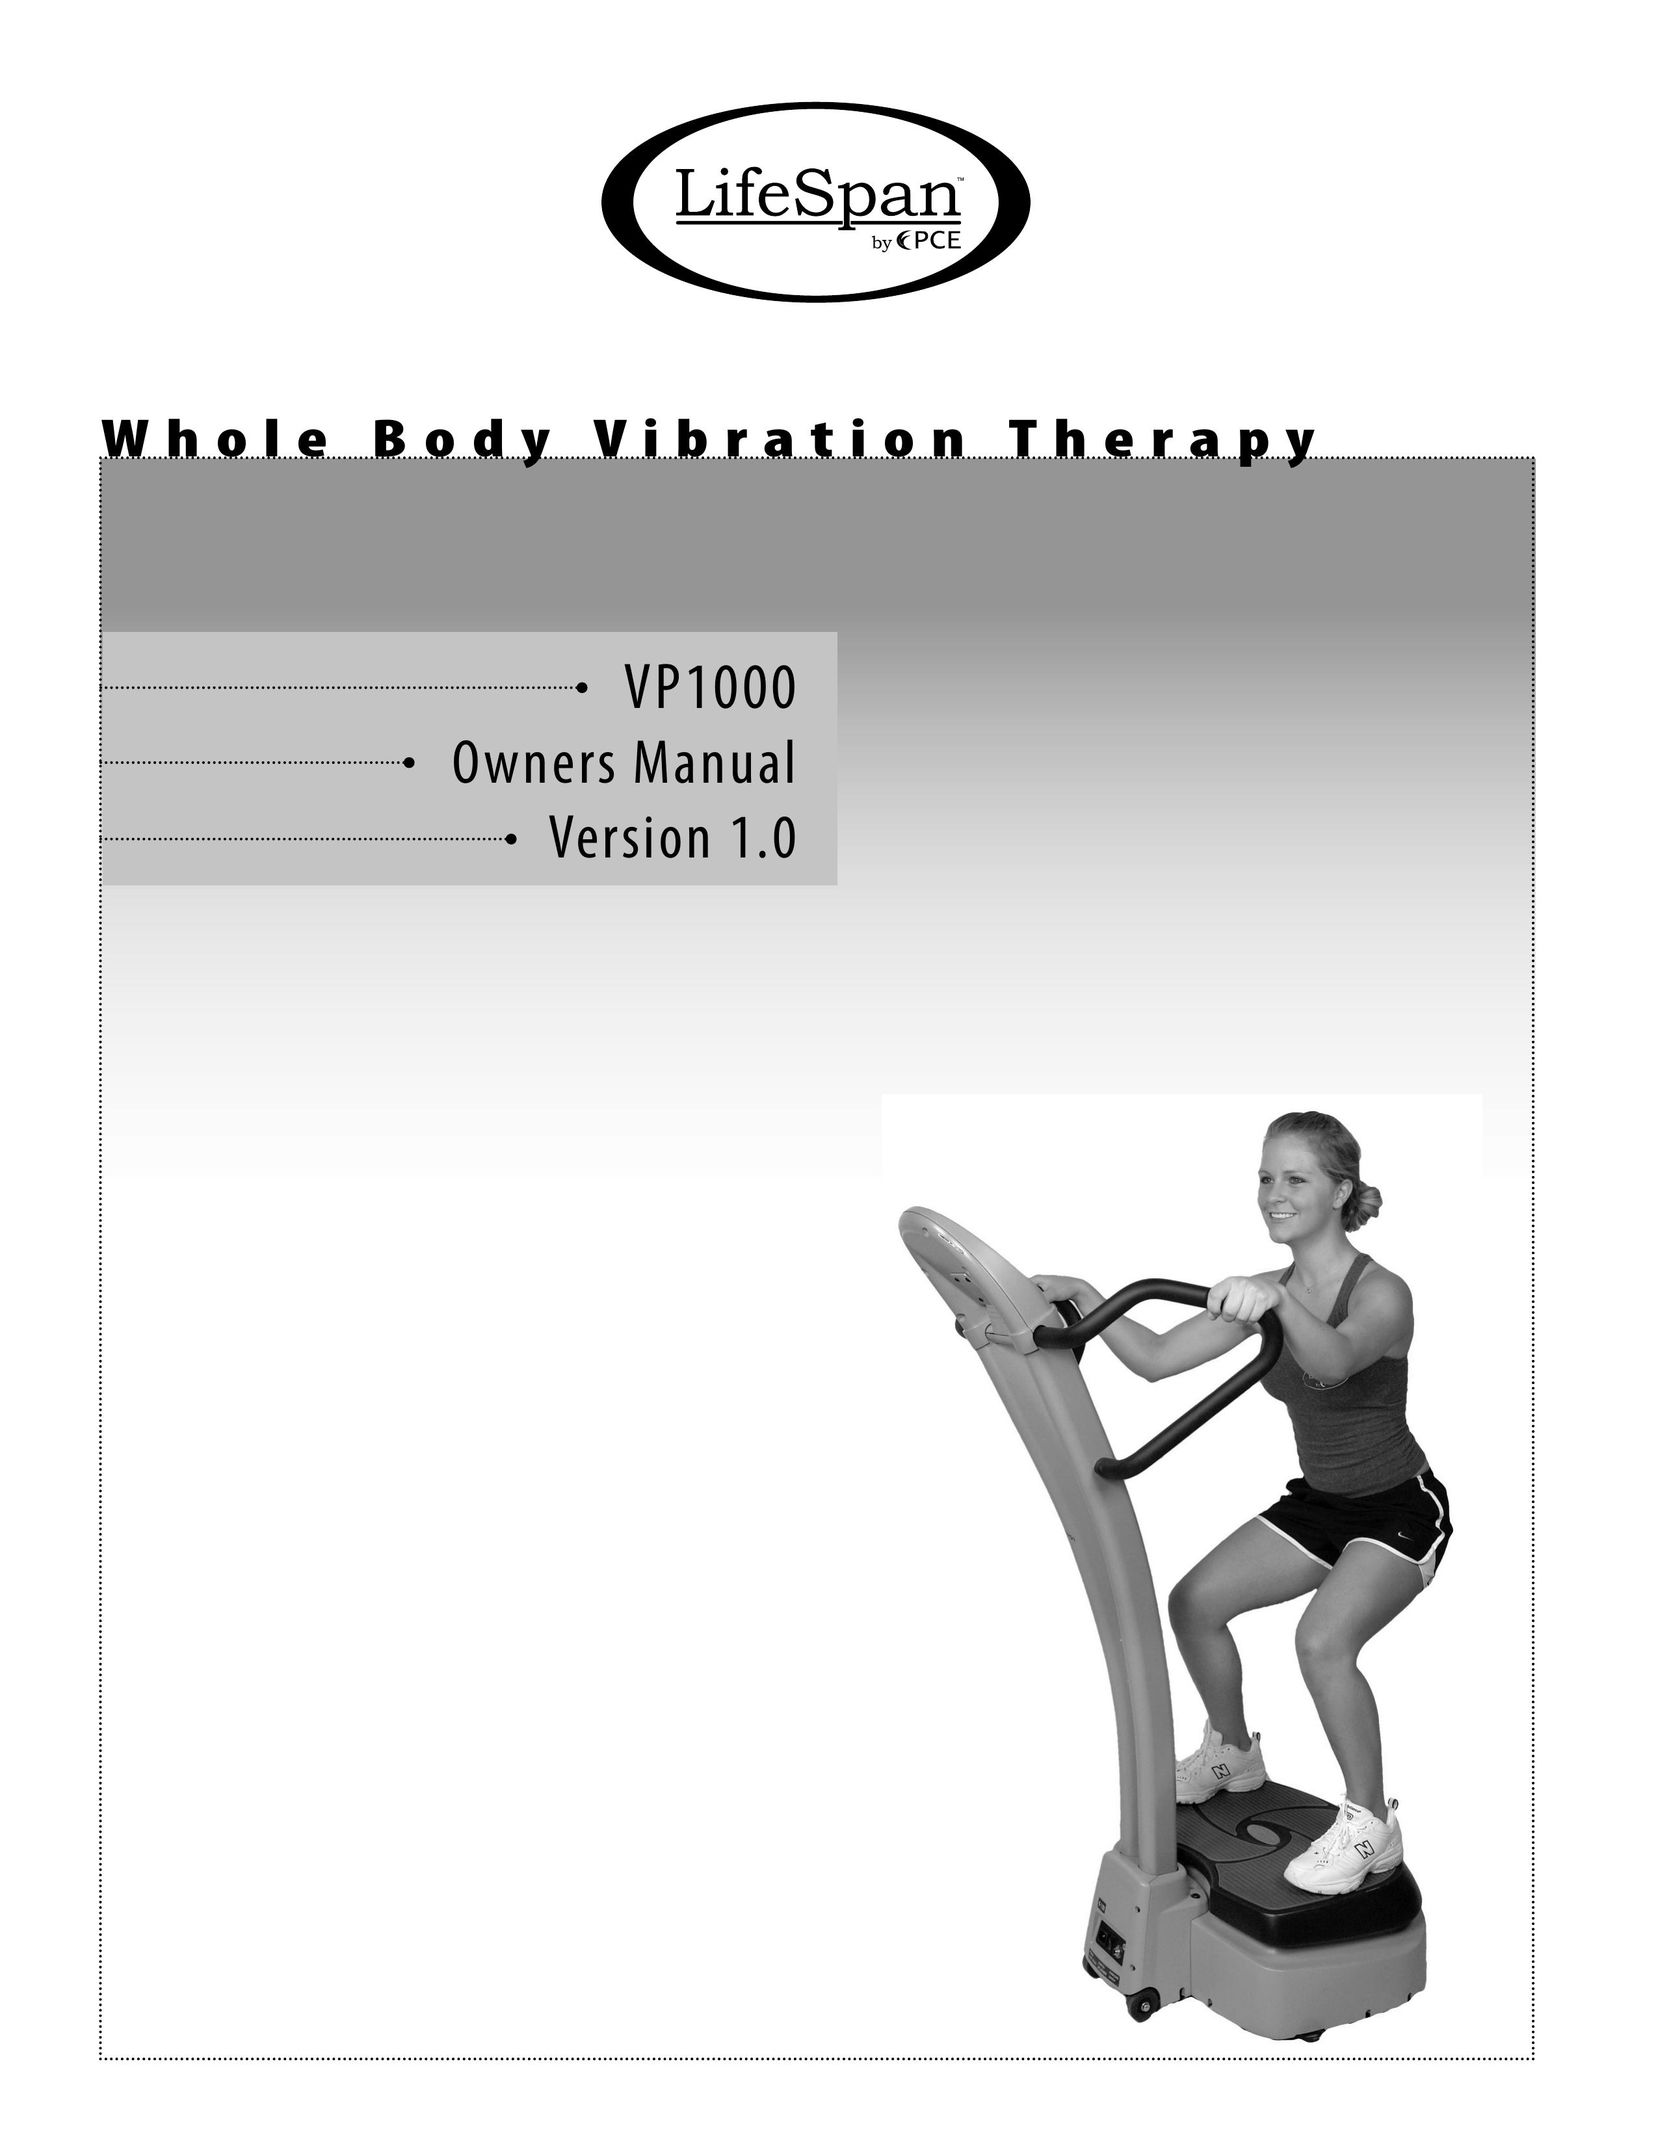 LifeSpan VP1000 Fitness Equipment User Manual